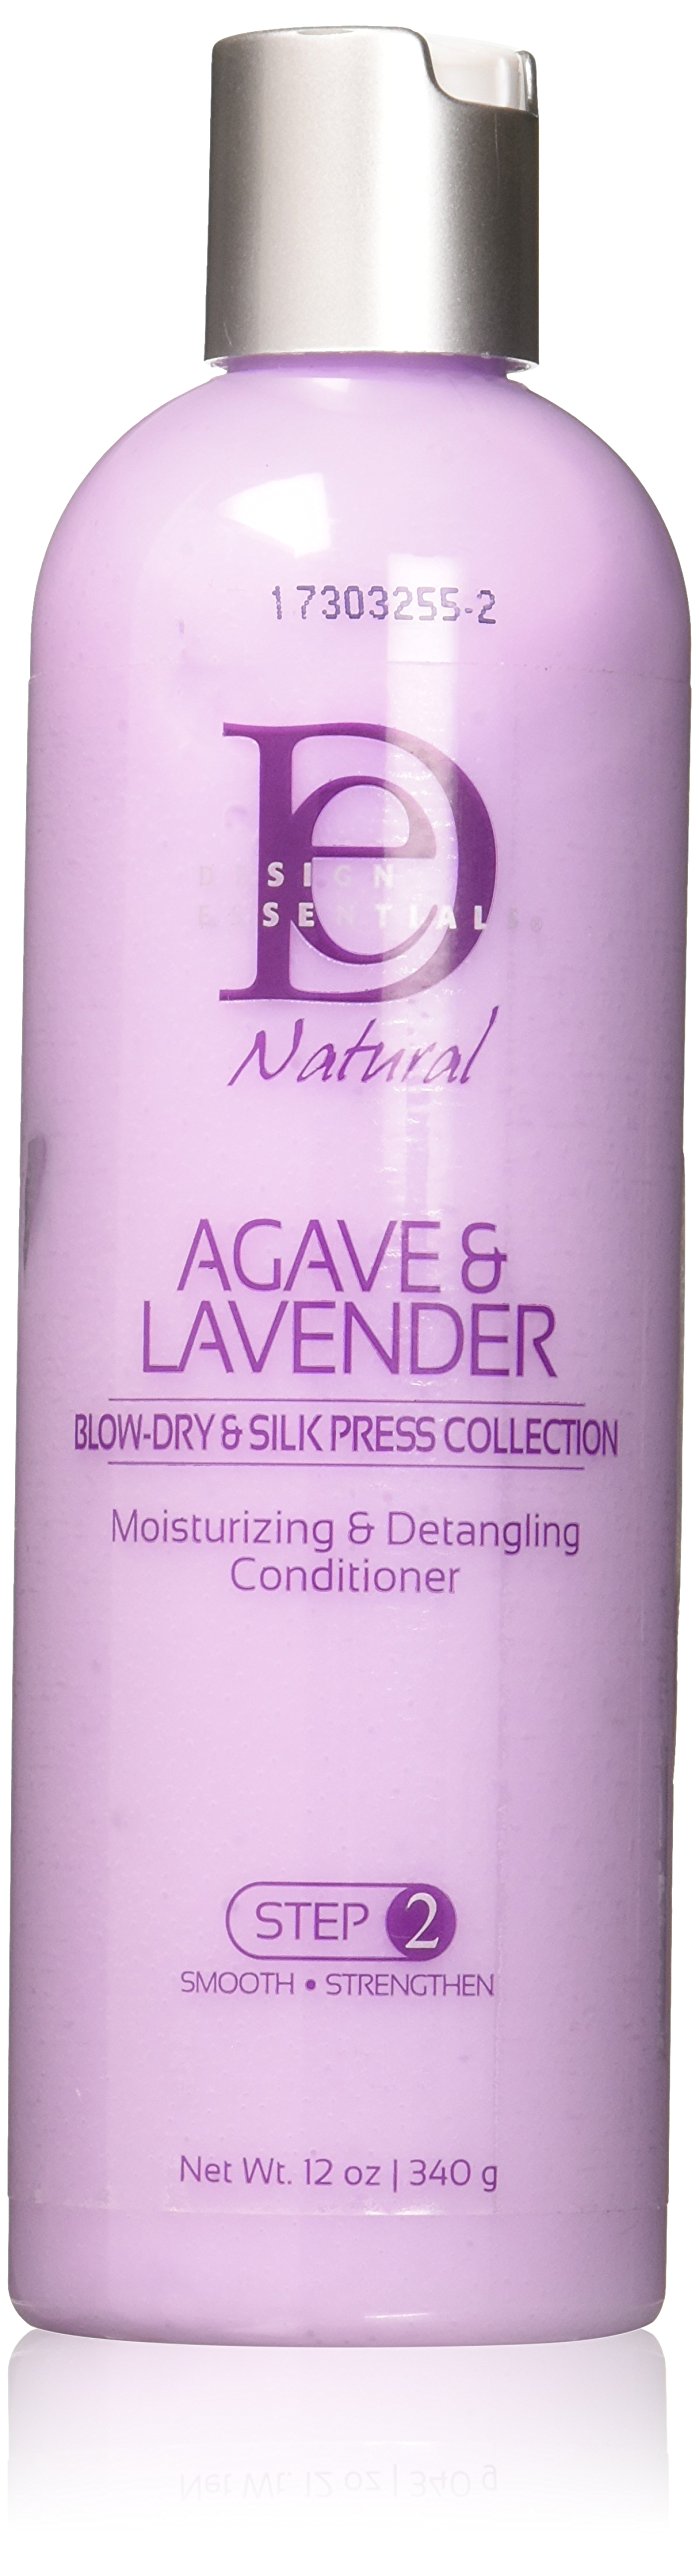 Design Essentials Agave & Lavender Moisturizing & Detangling Conditioner-Blow-Dry & Silk Press Collection - 12oz